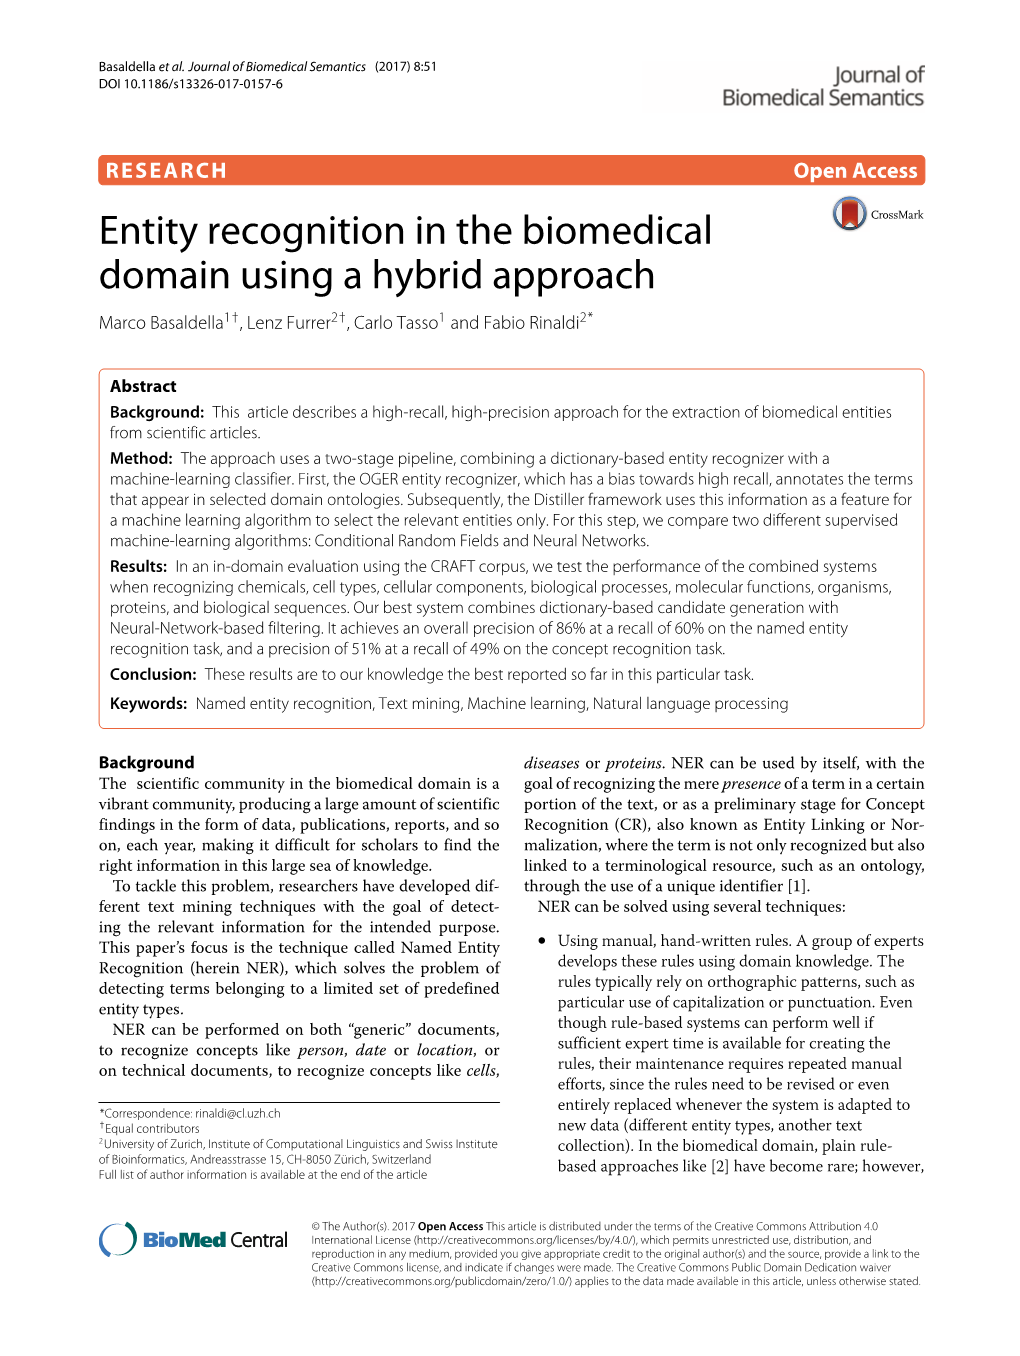 Entity Recognition in the Biomedical Domain Using a Hybrid Approach Marco Basaldella1†, Lenz Furrer2†, Carlo Tasso1 and Fabio Rinaldi2*